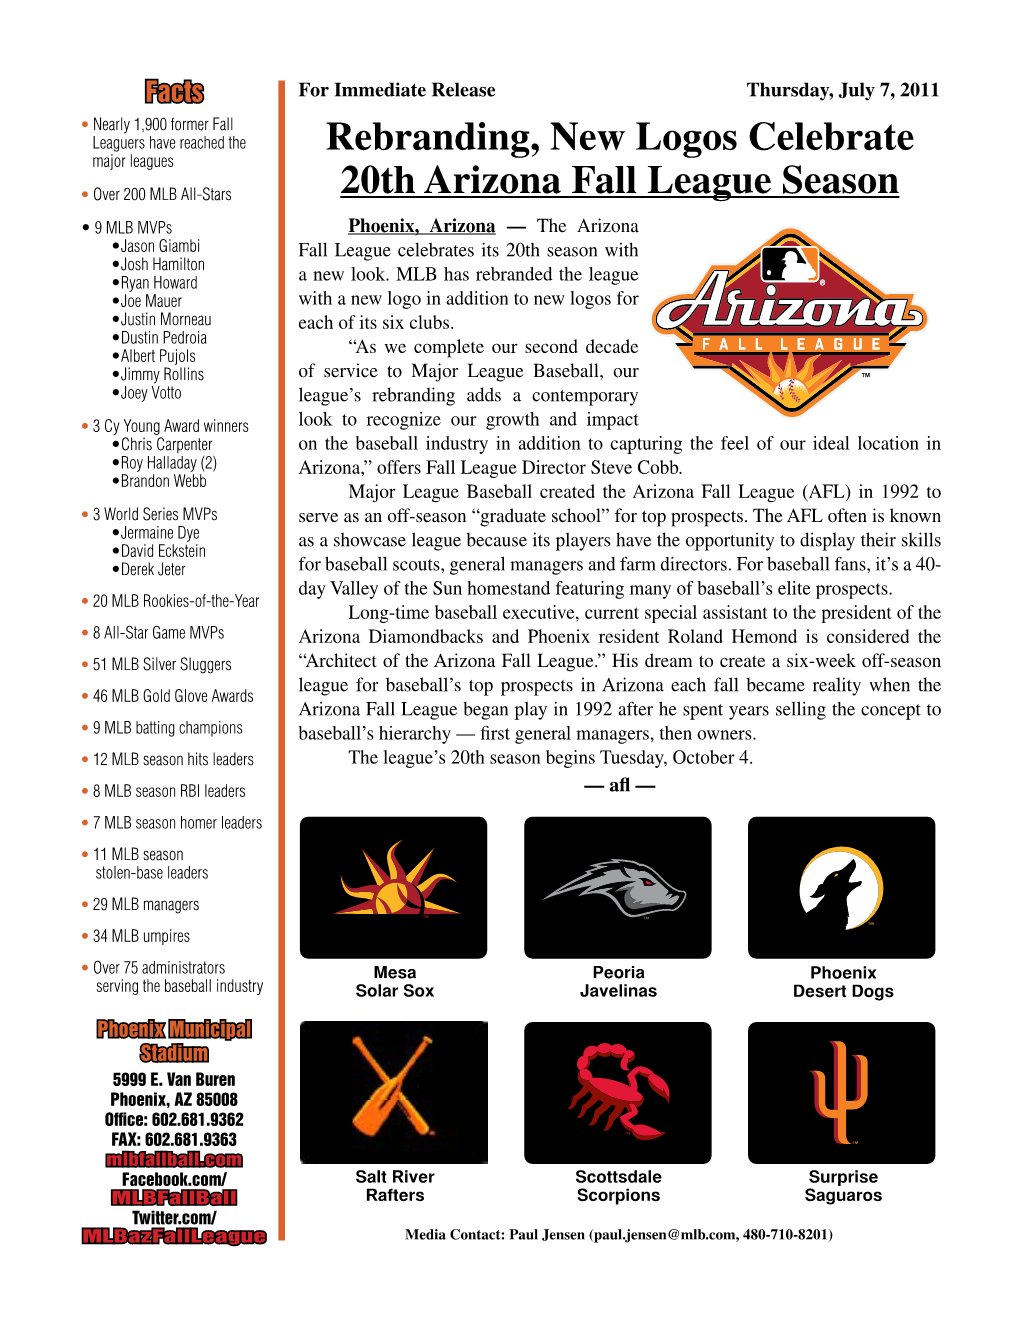 Rebranding, New Logos Celebrate 20Th Arizona Fall League Season